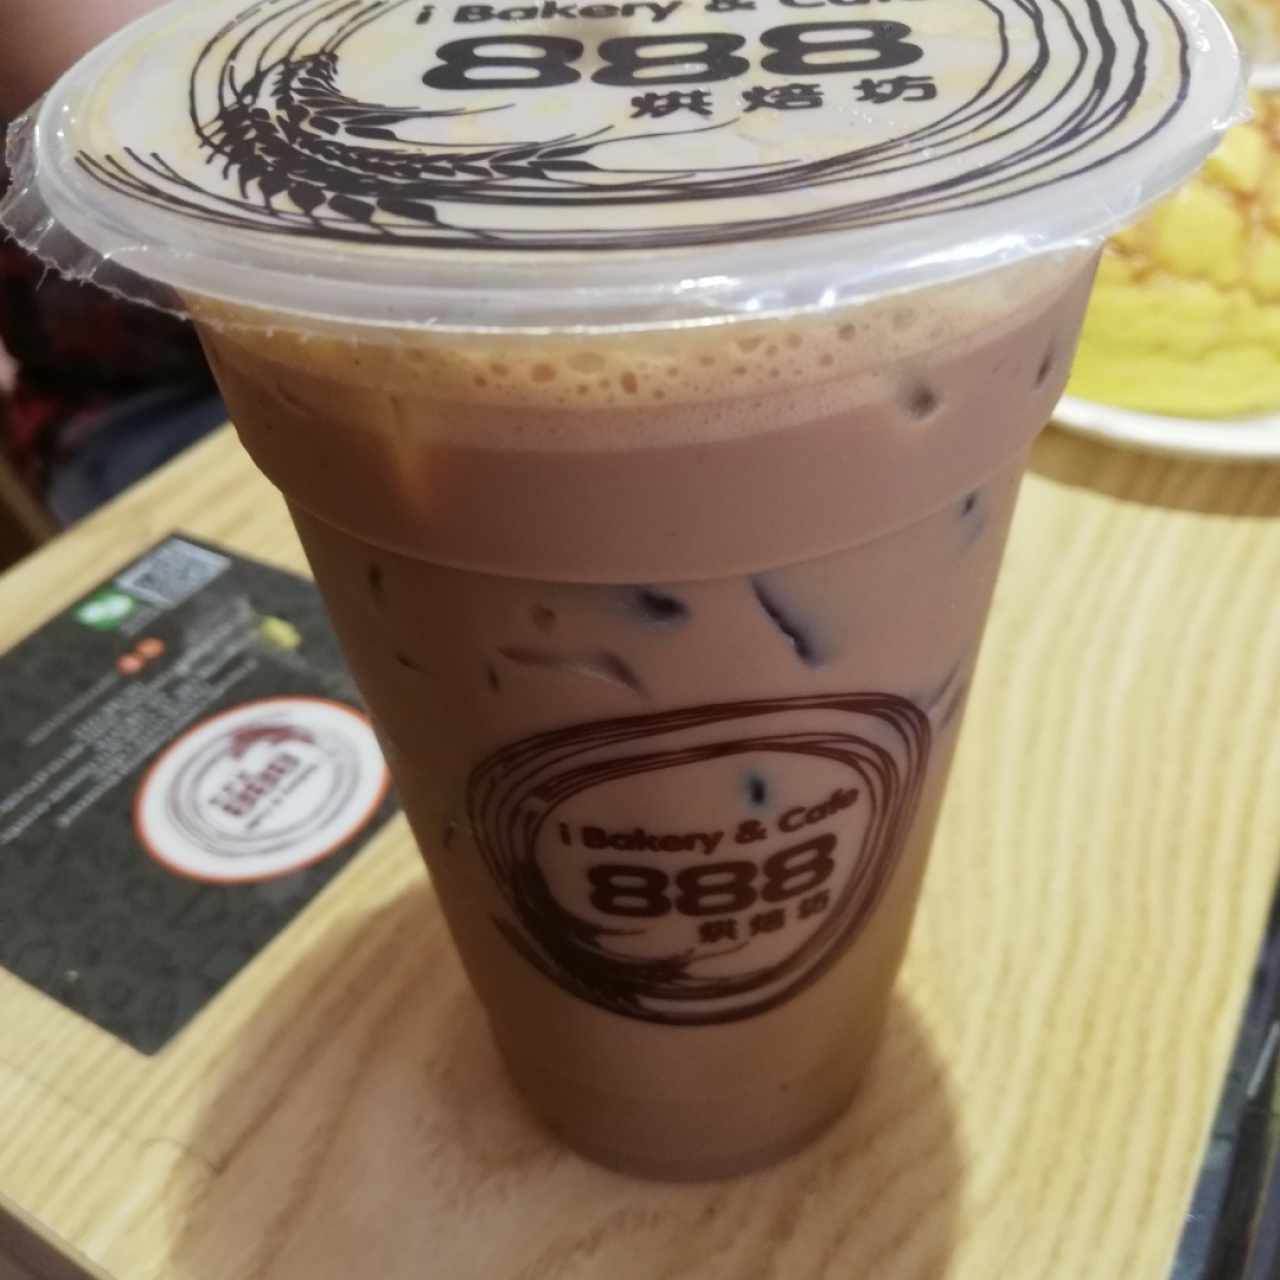 Vietnamese style coffee